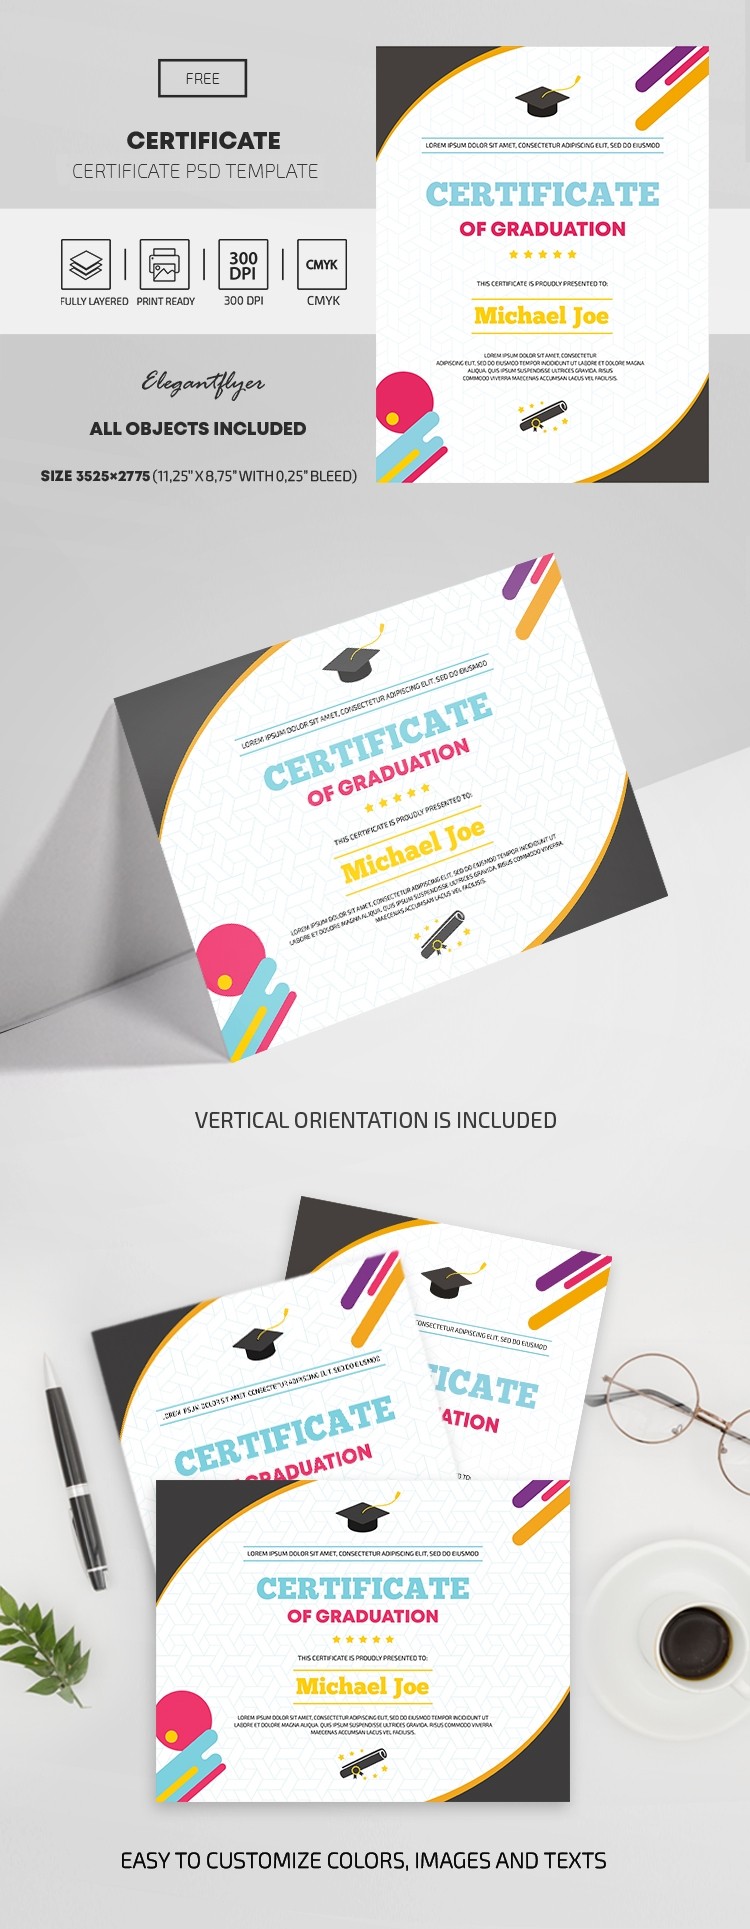 Certificat de graduation by ElegantFlyer